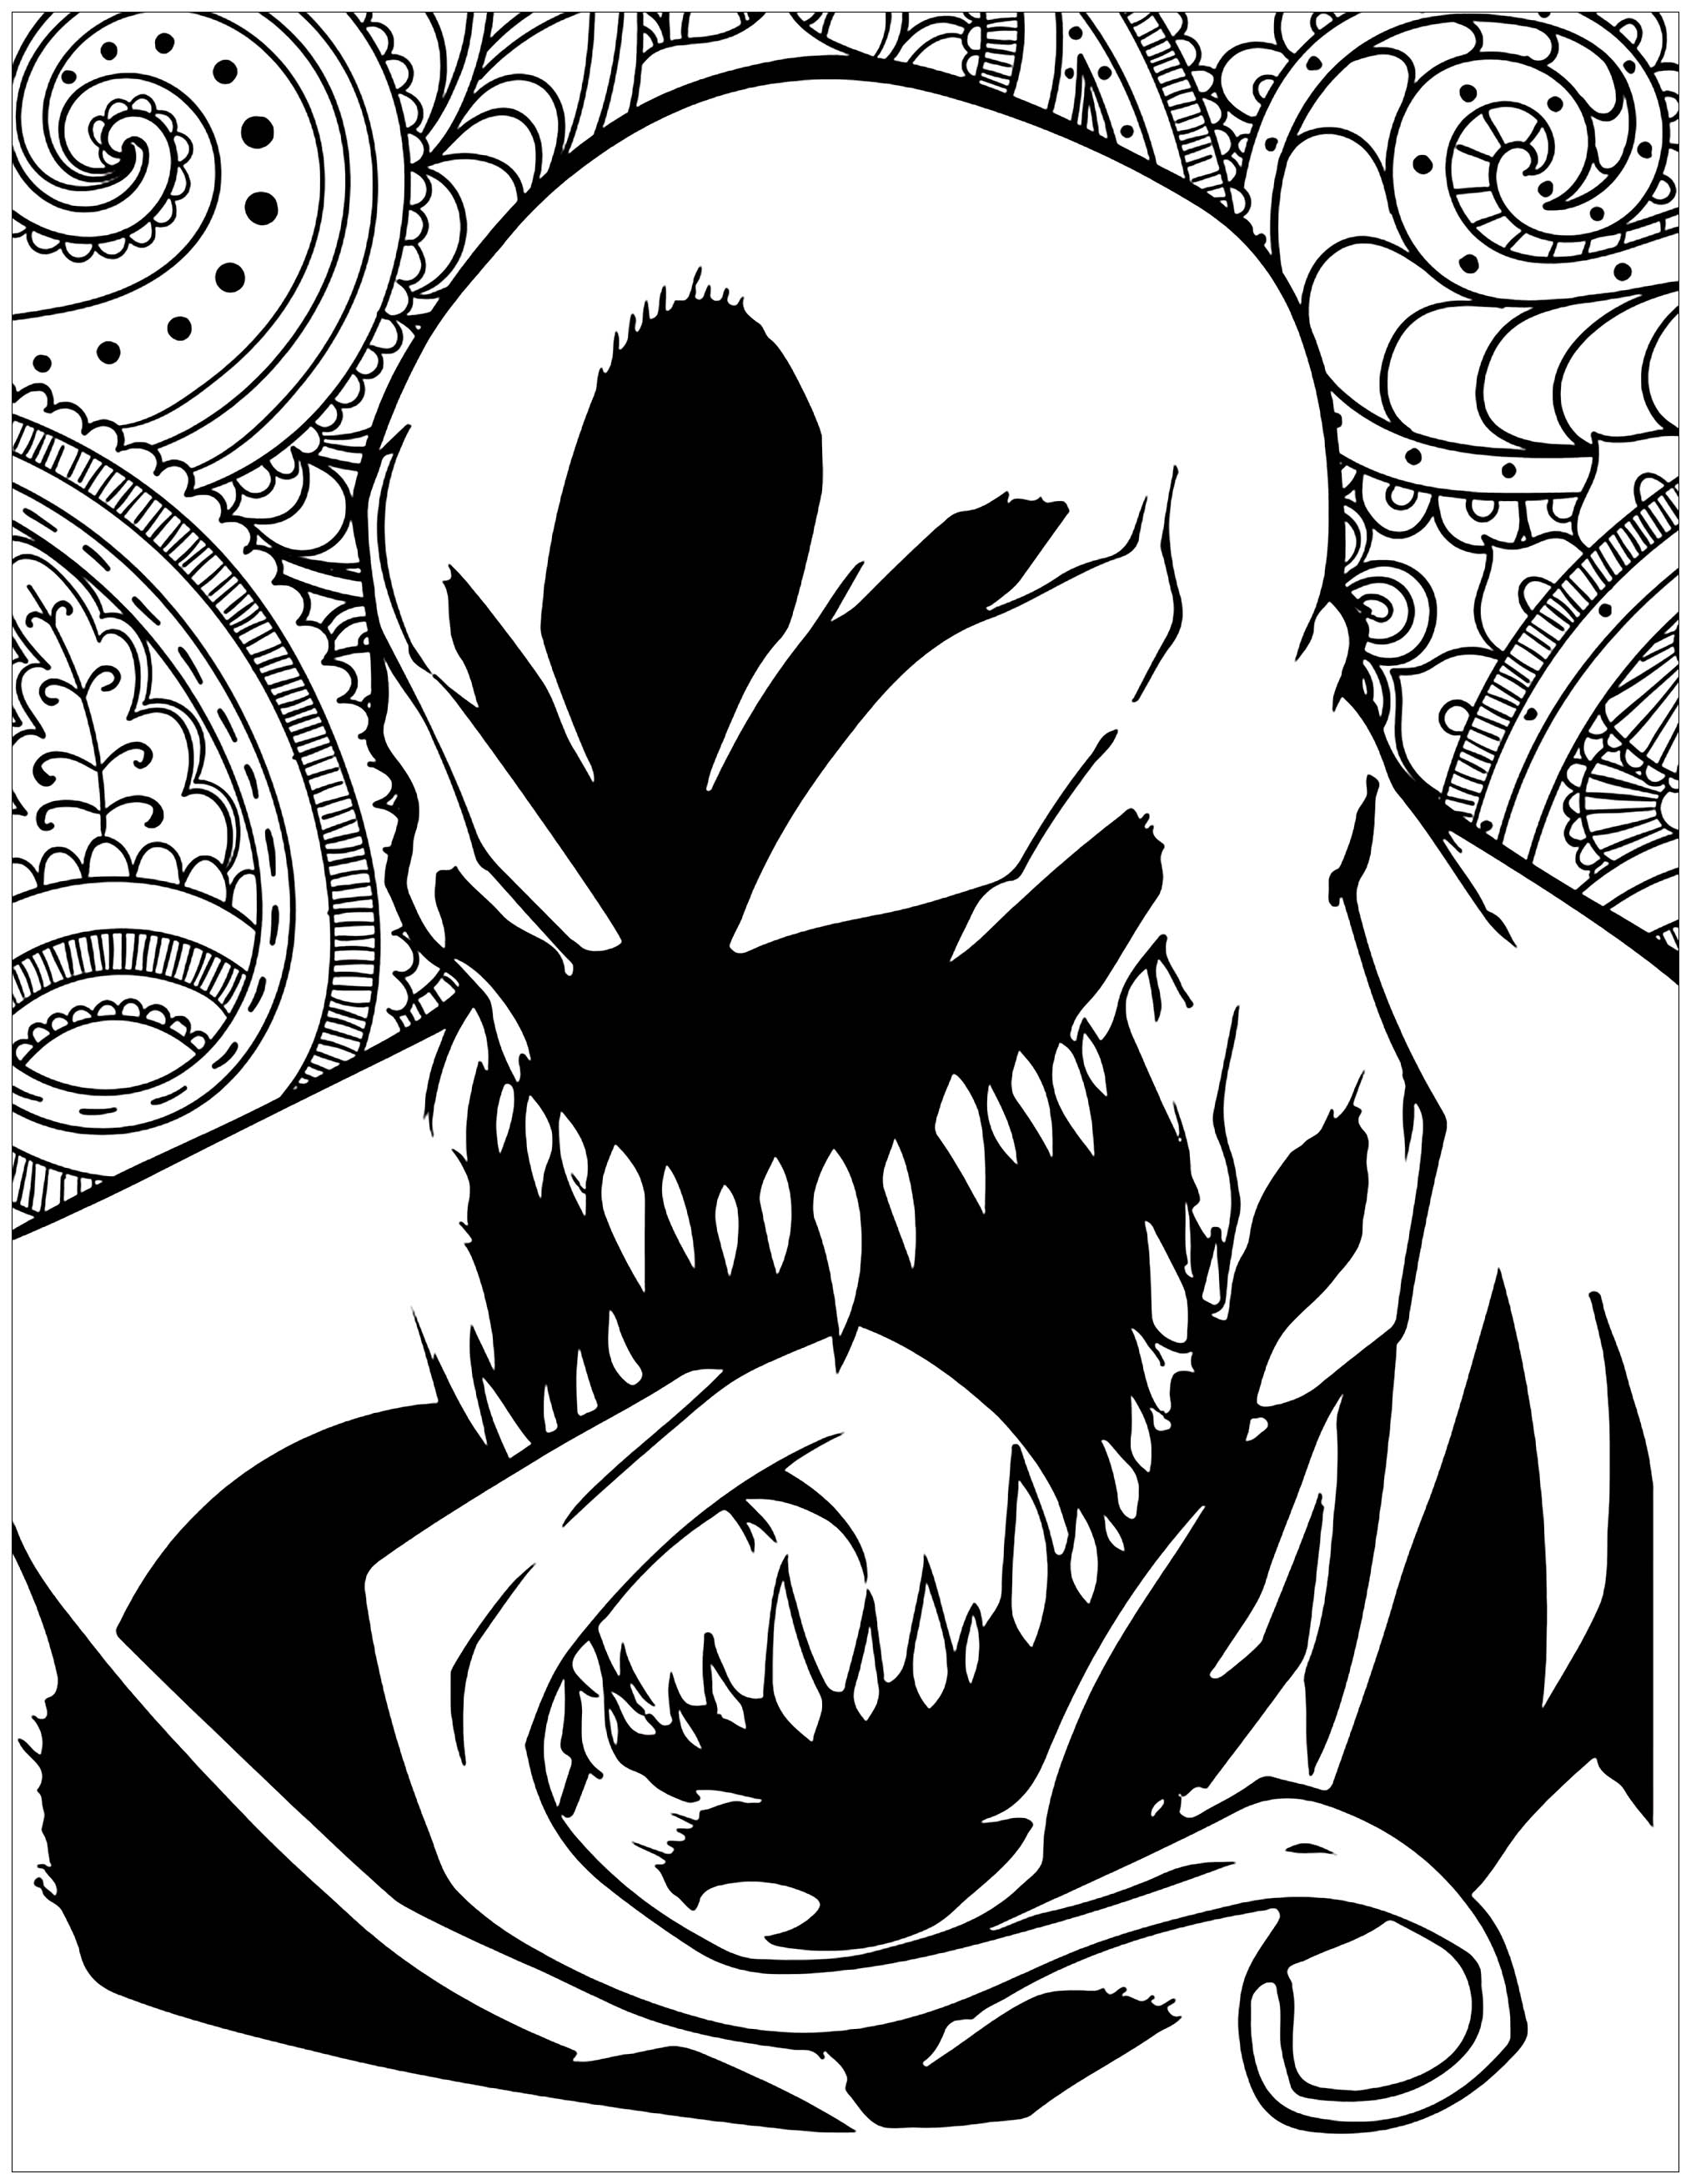 Marvel villains Venom - Books Adult Coloring Pages